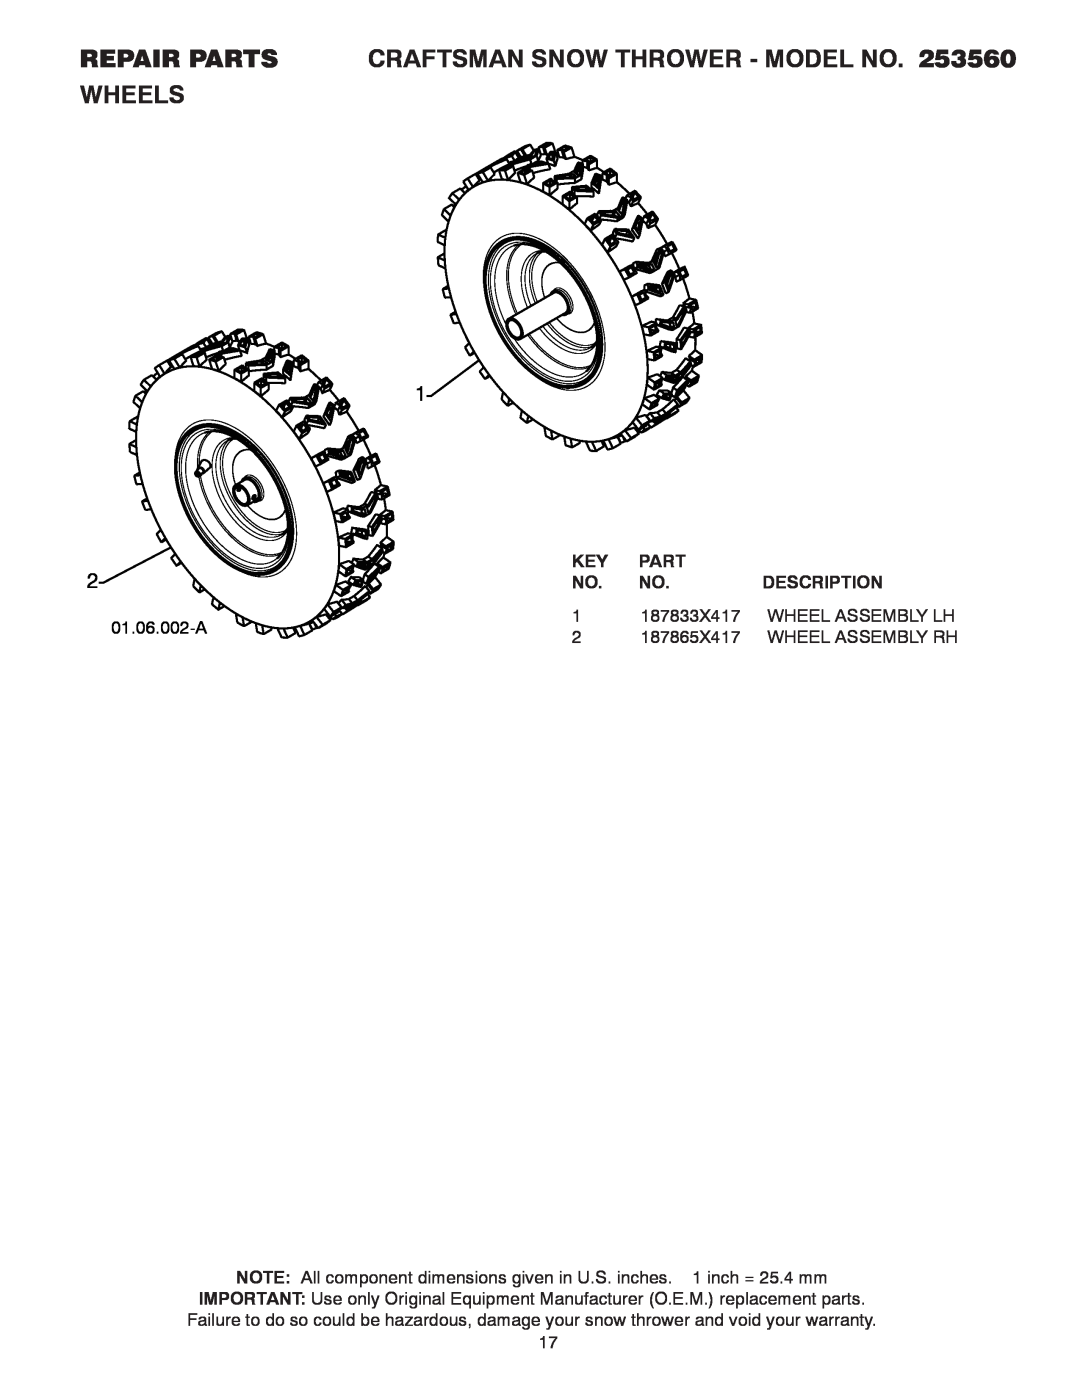 Craftsman manual REPAIR PARTS CRAFTSMAN SNOW THROWER - MODEL NO. 253560 WHEELS, Part, Description, Wheel Assembly Rh 